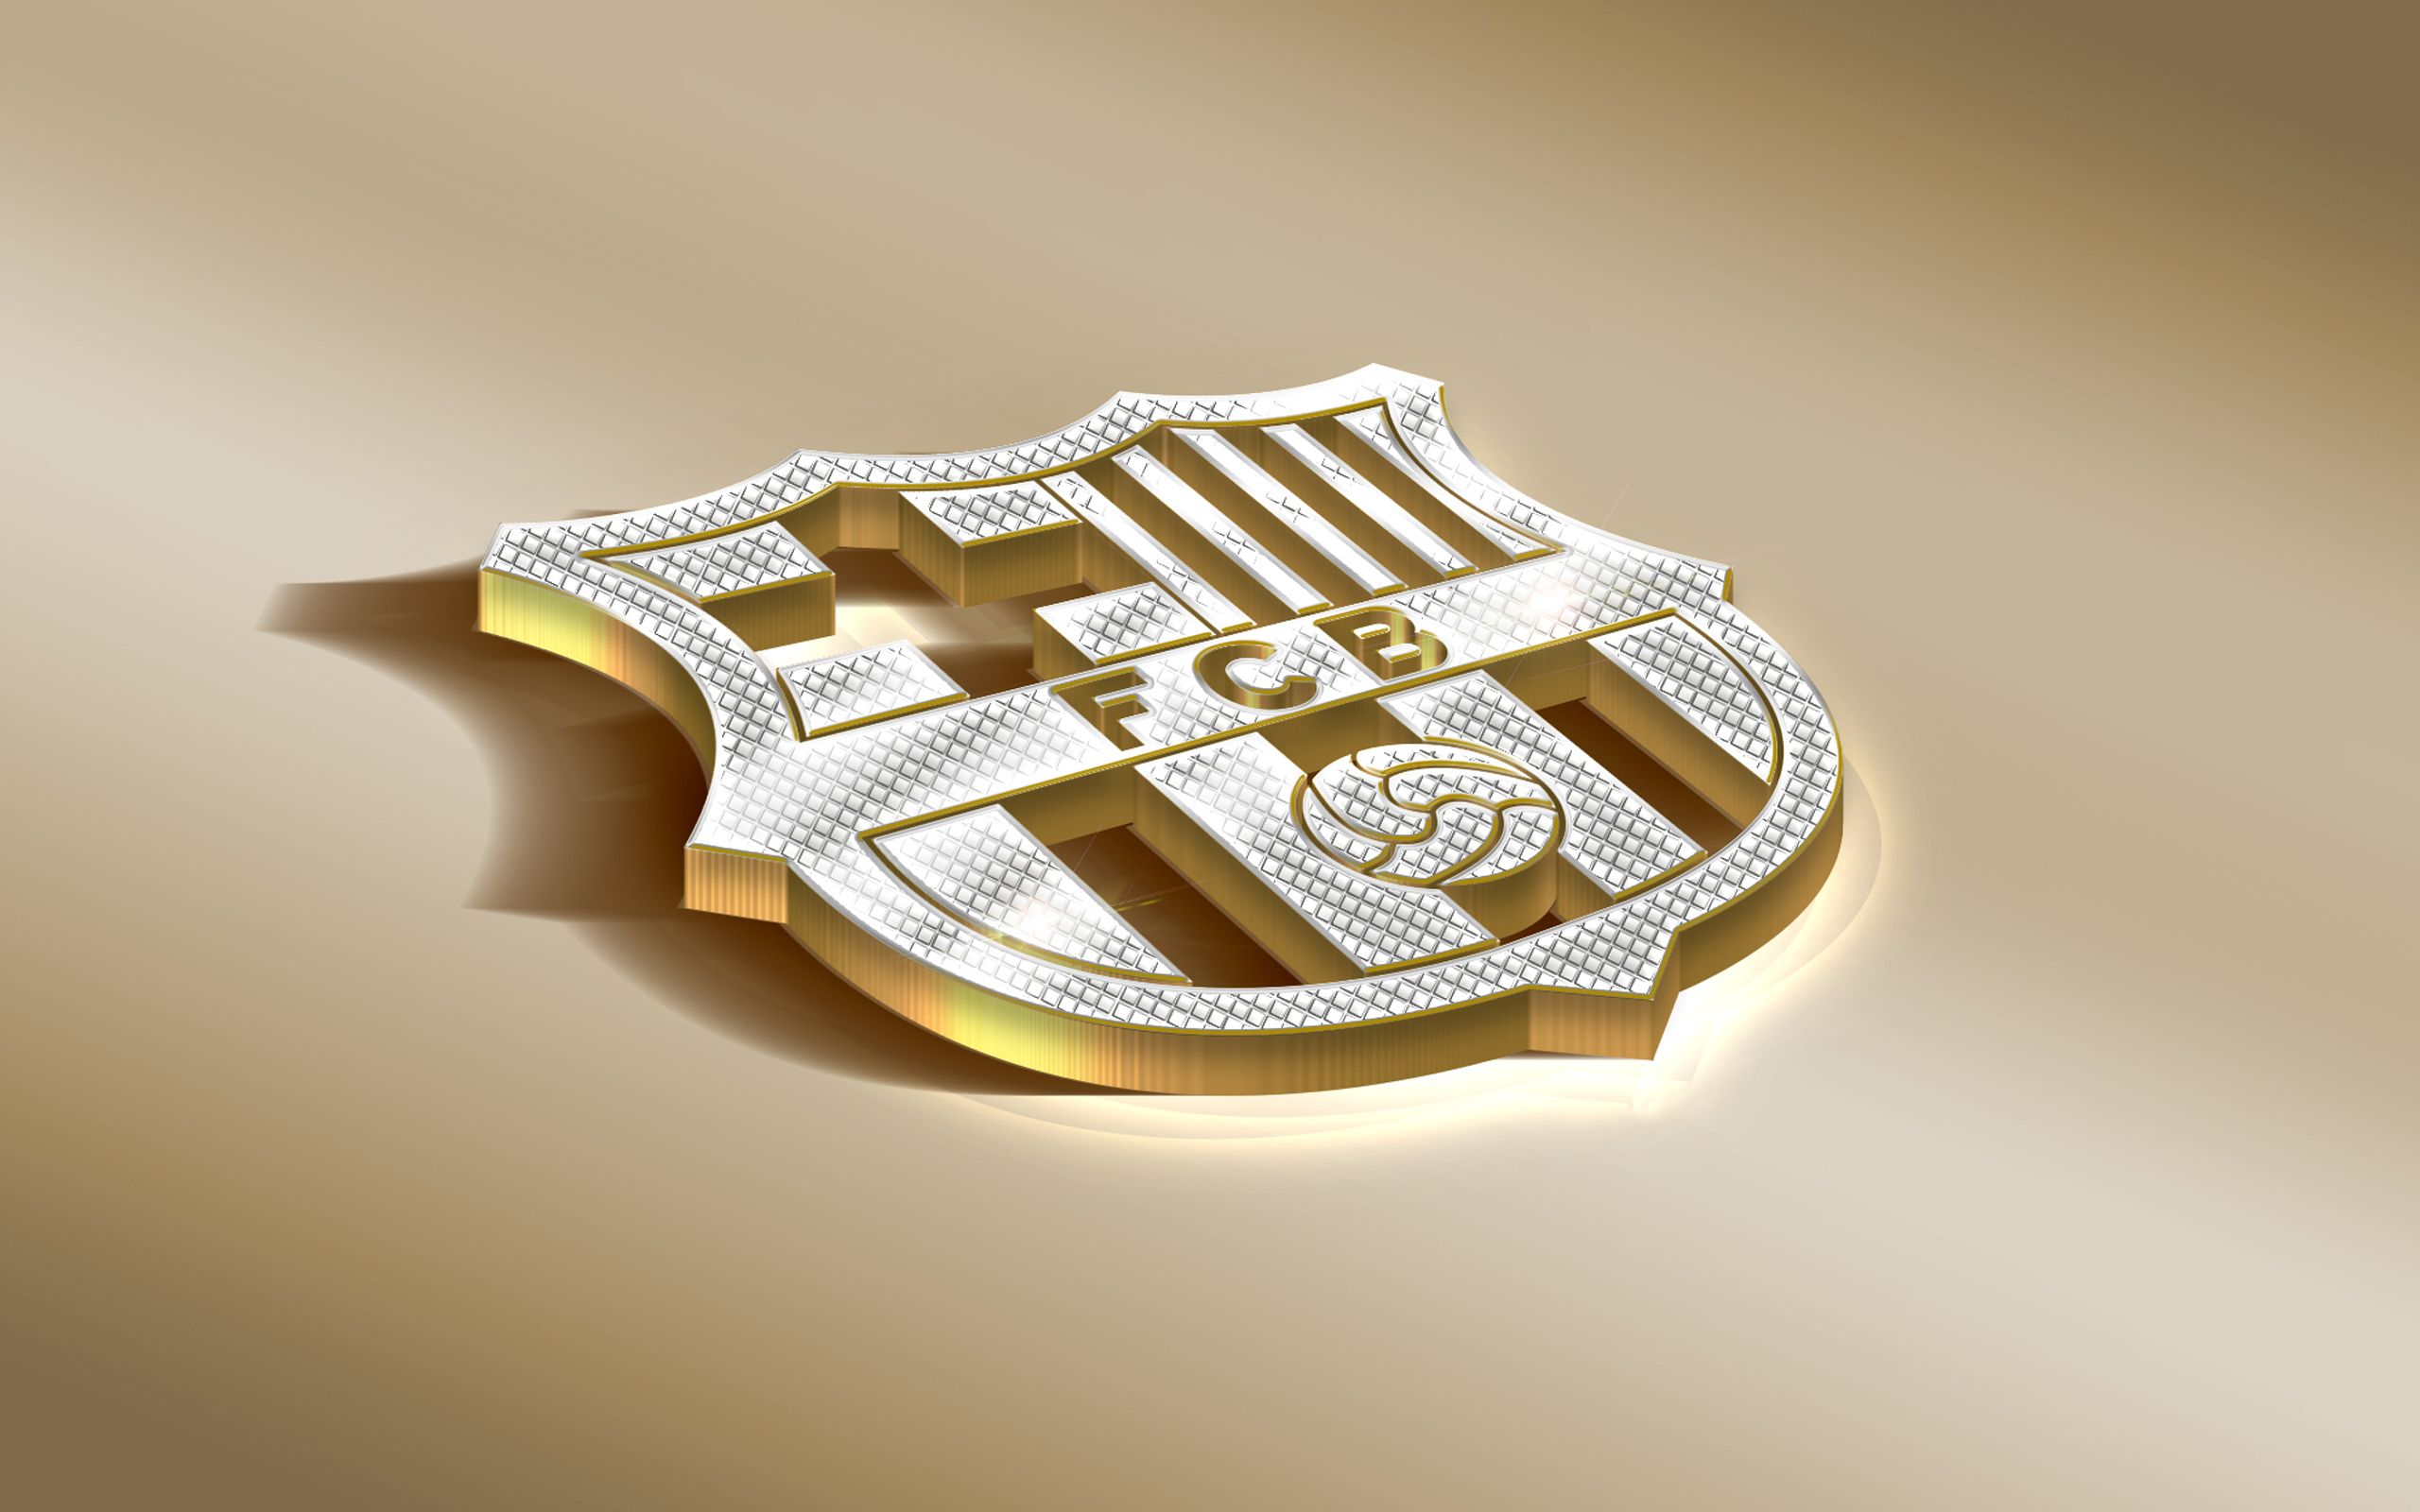 Fc Barcelona Logo Soccer 2560x1600